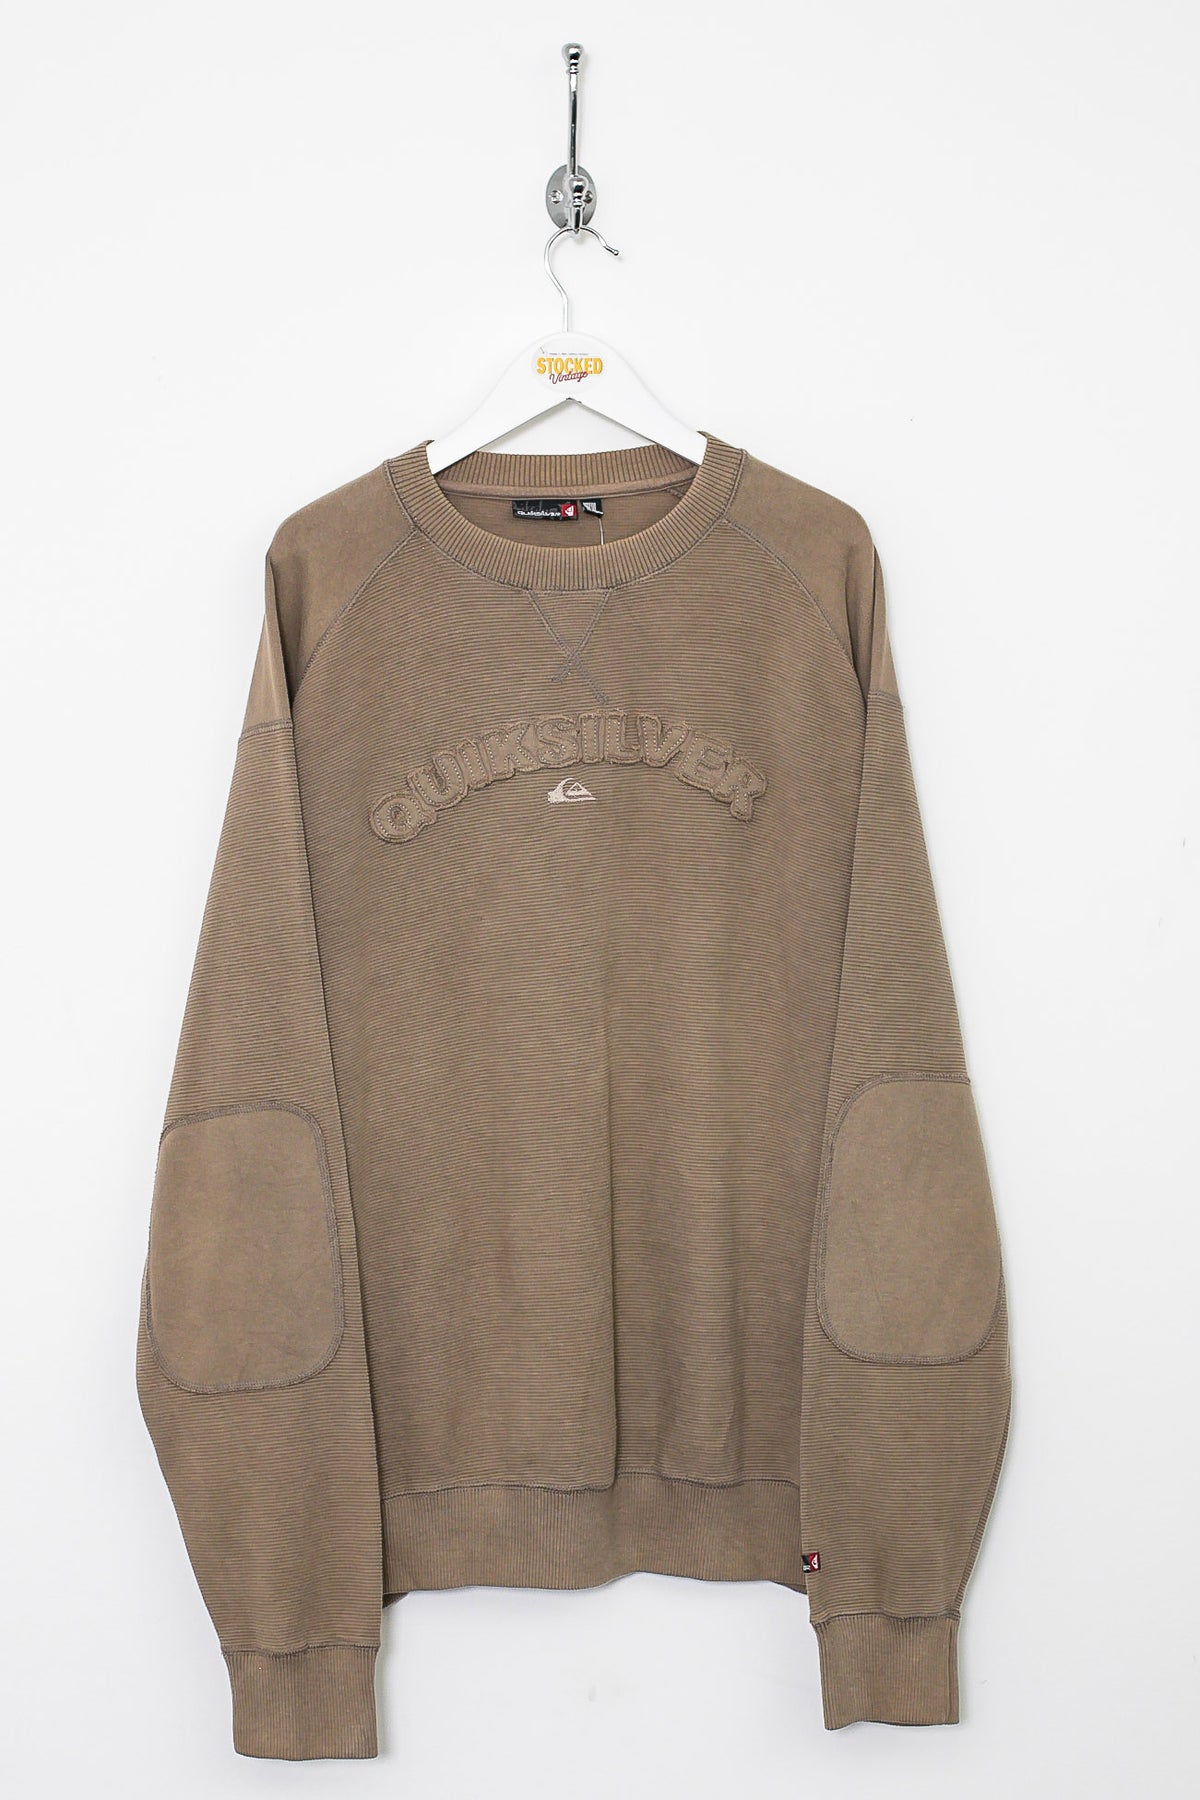 00s Quicksilver Sweatshirt (XL)